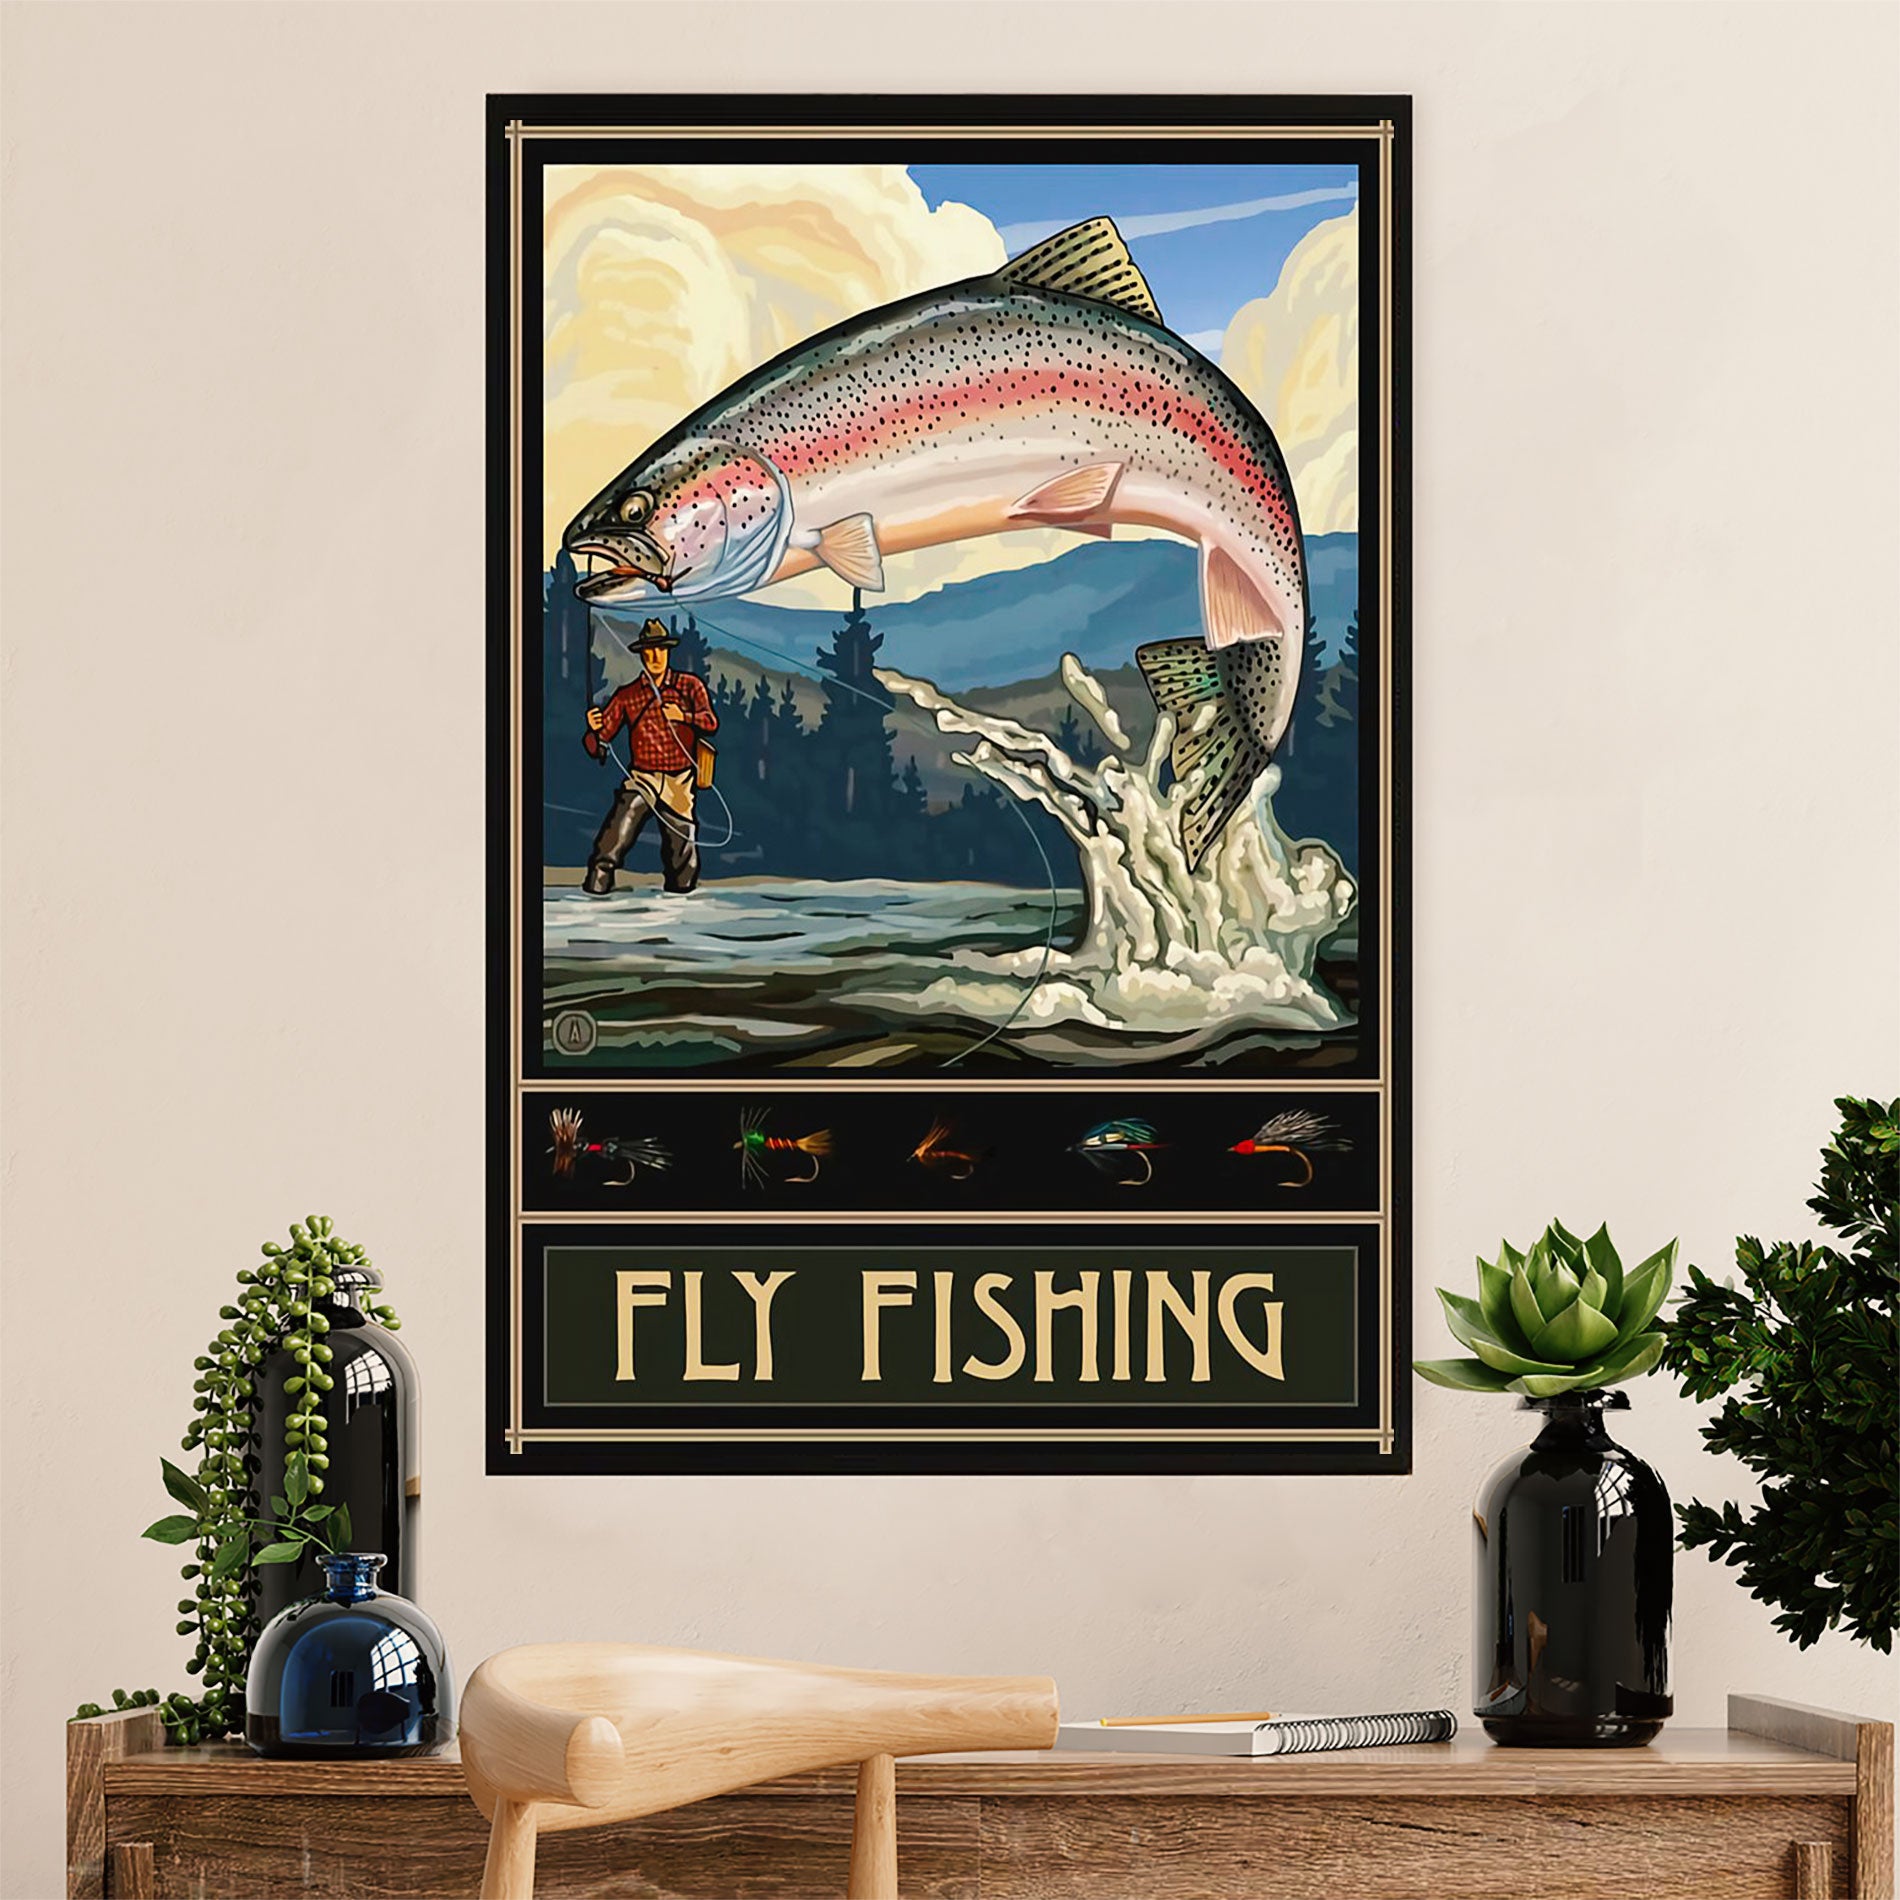 Fishing Poster Room Wall Art Prints, Fly Fishing